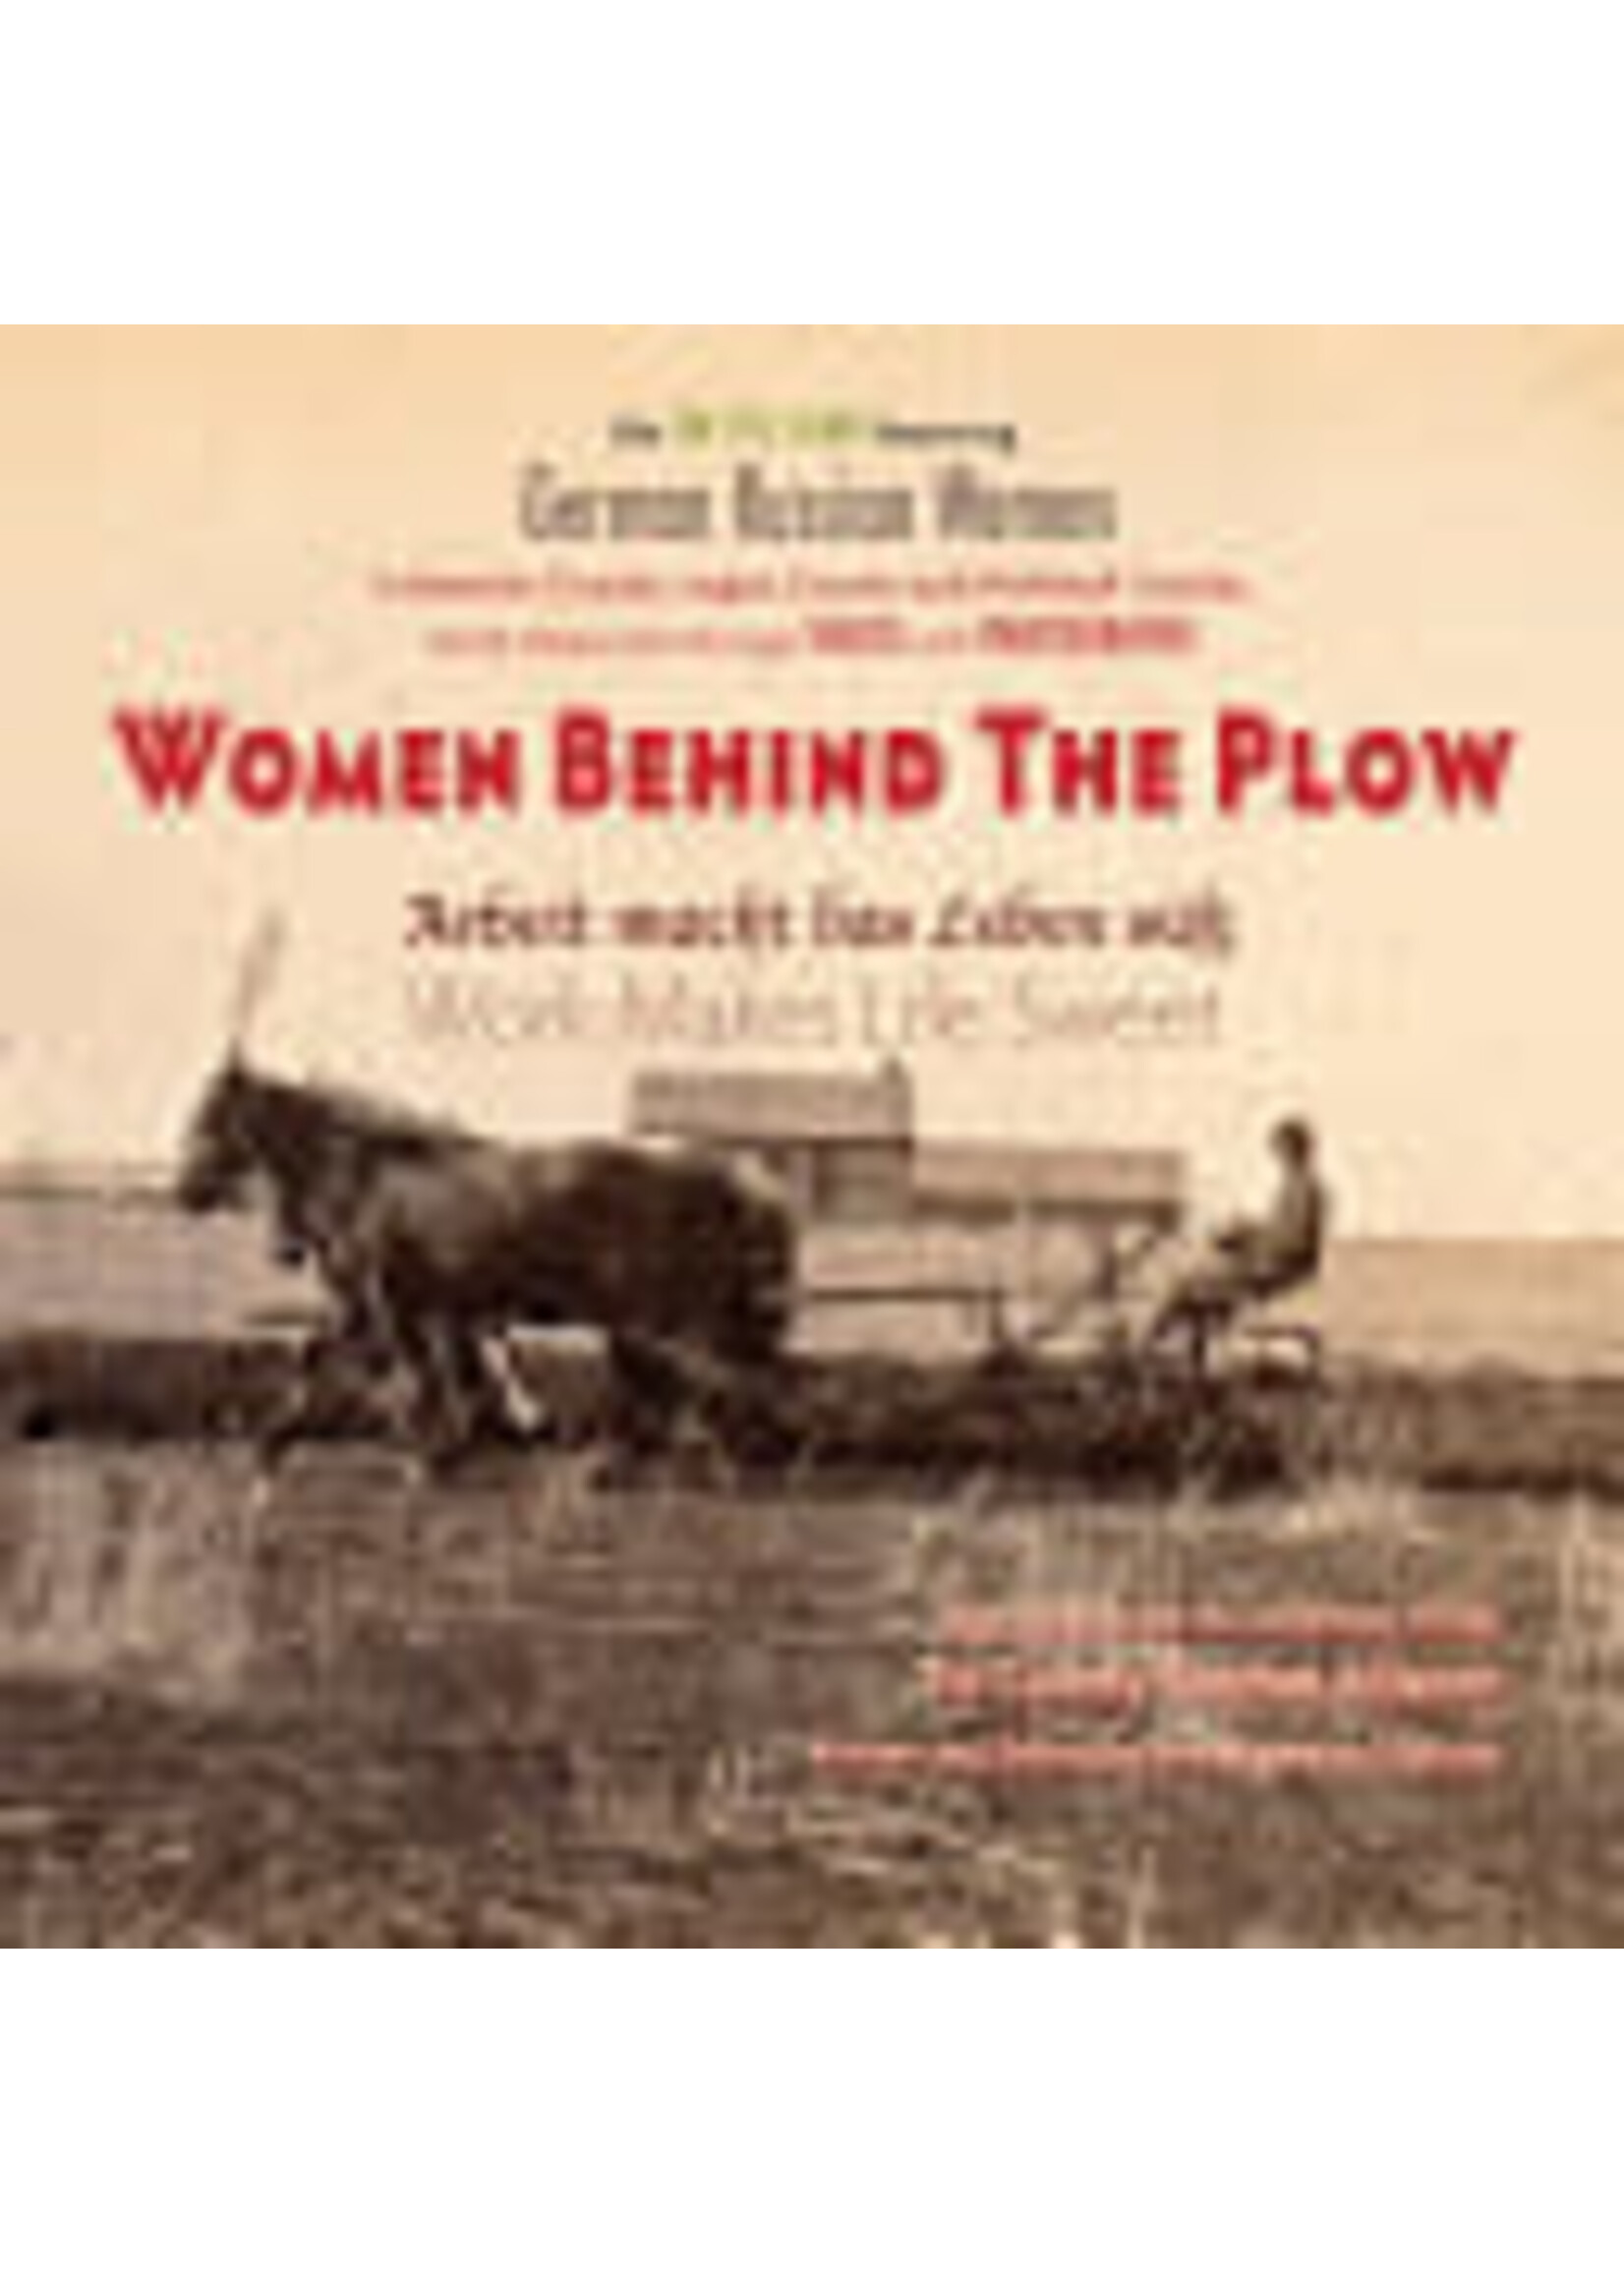 Women Behind the Plow